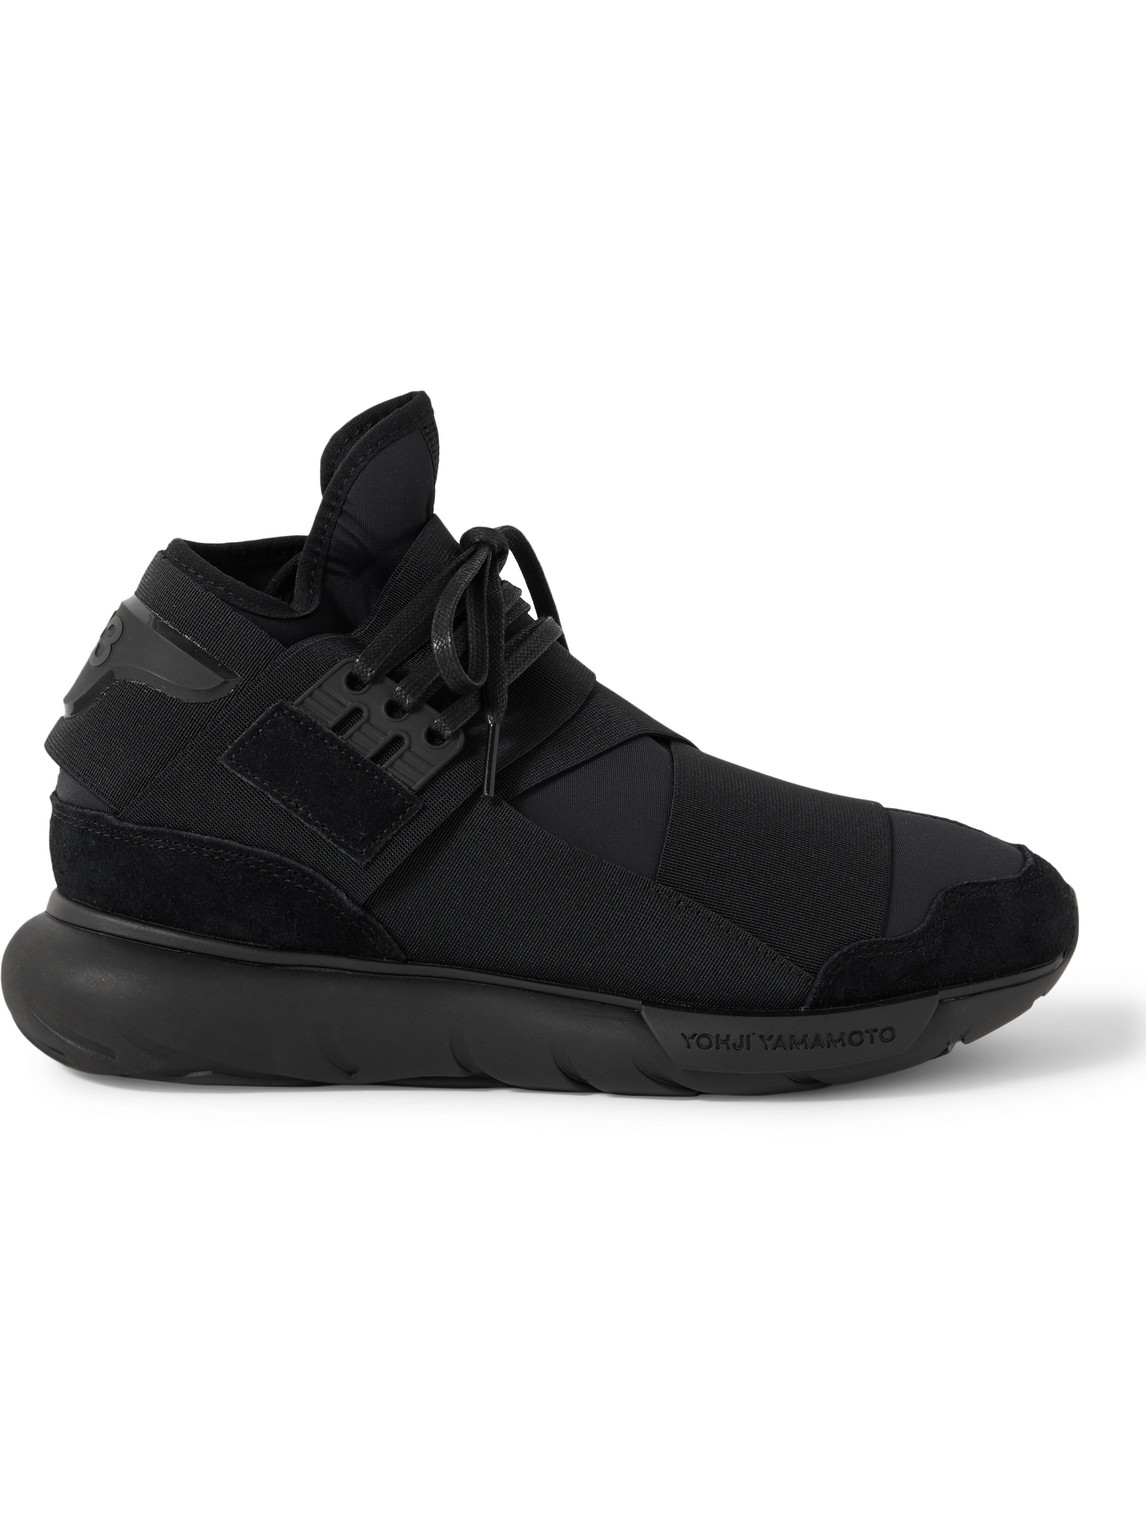 Y-3 Adidas Y3 Qasa Sneakers Ig9434 In Black Black Black | ModeSens